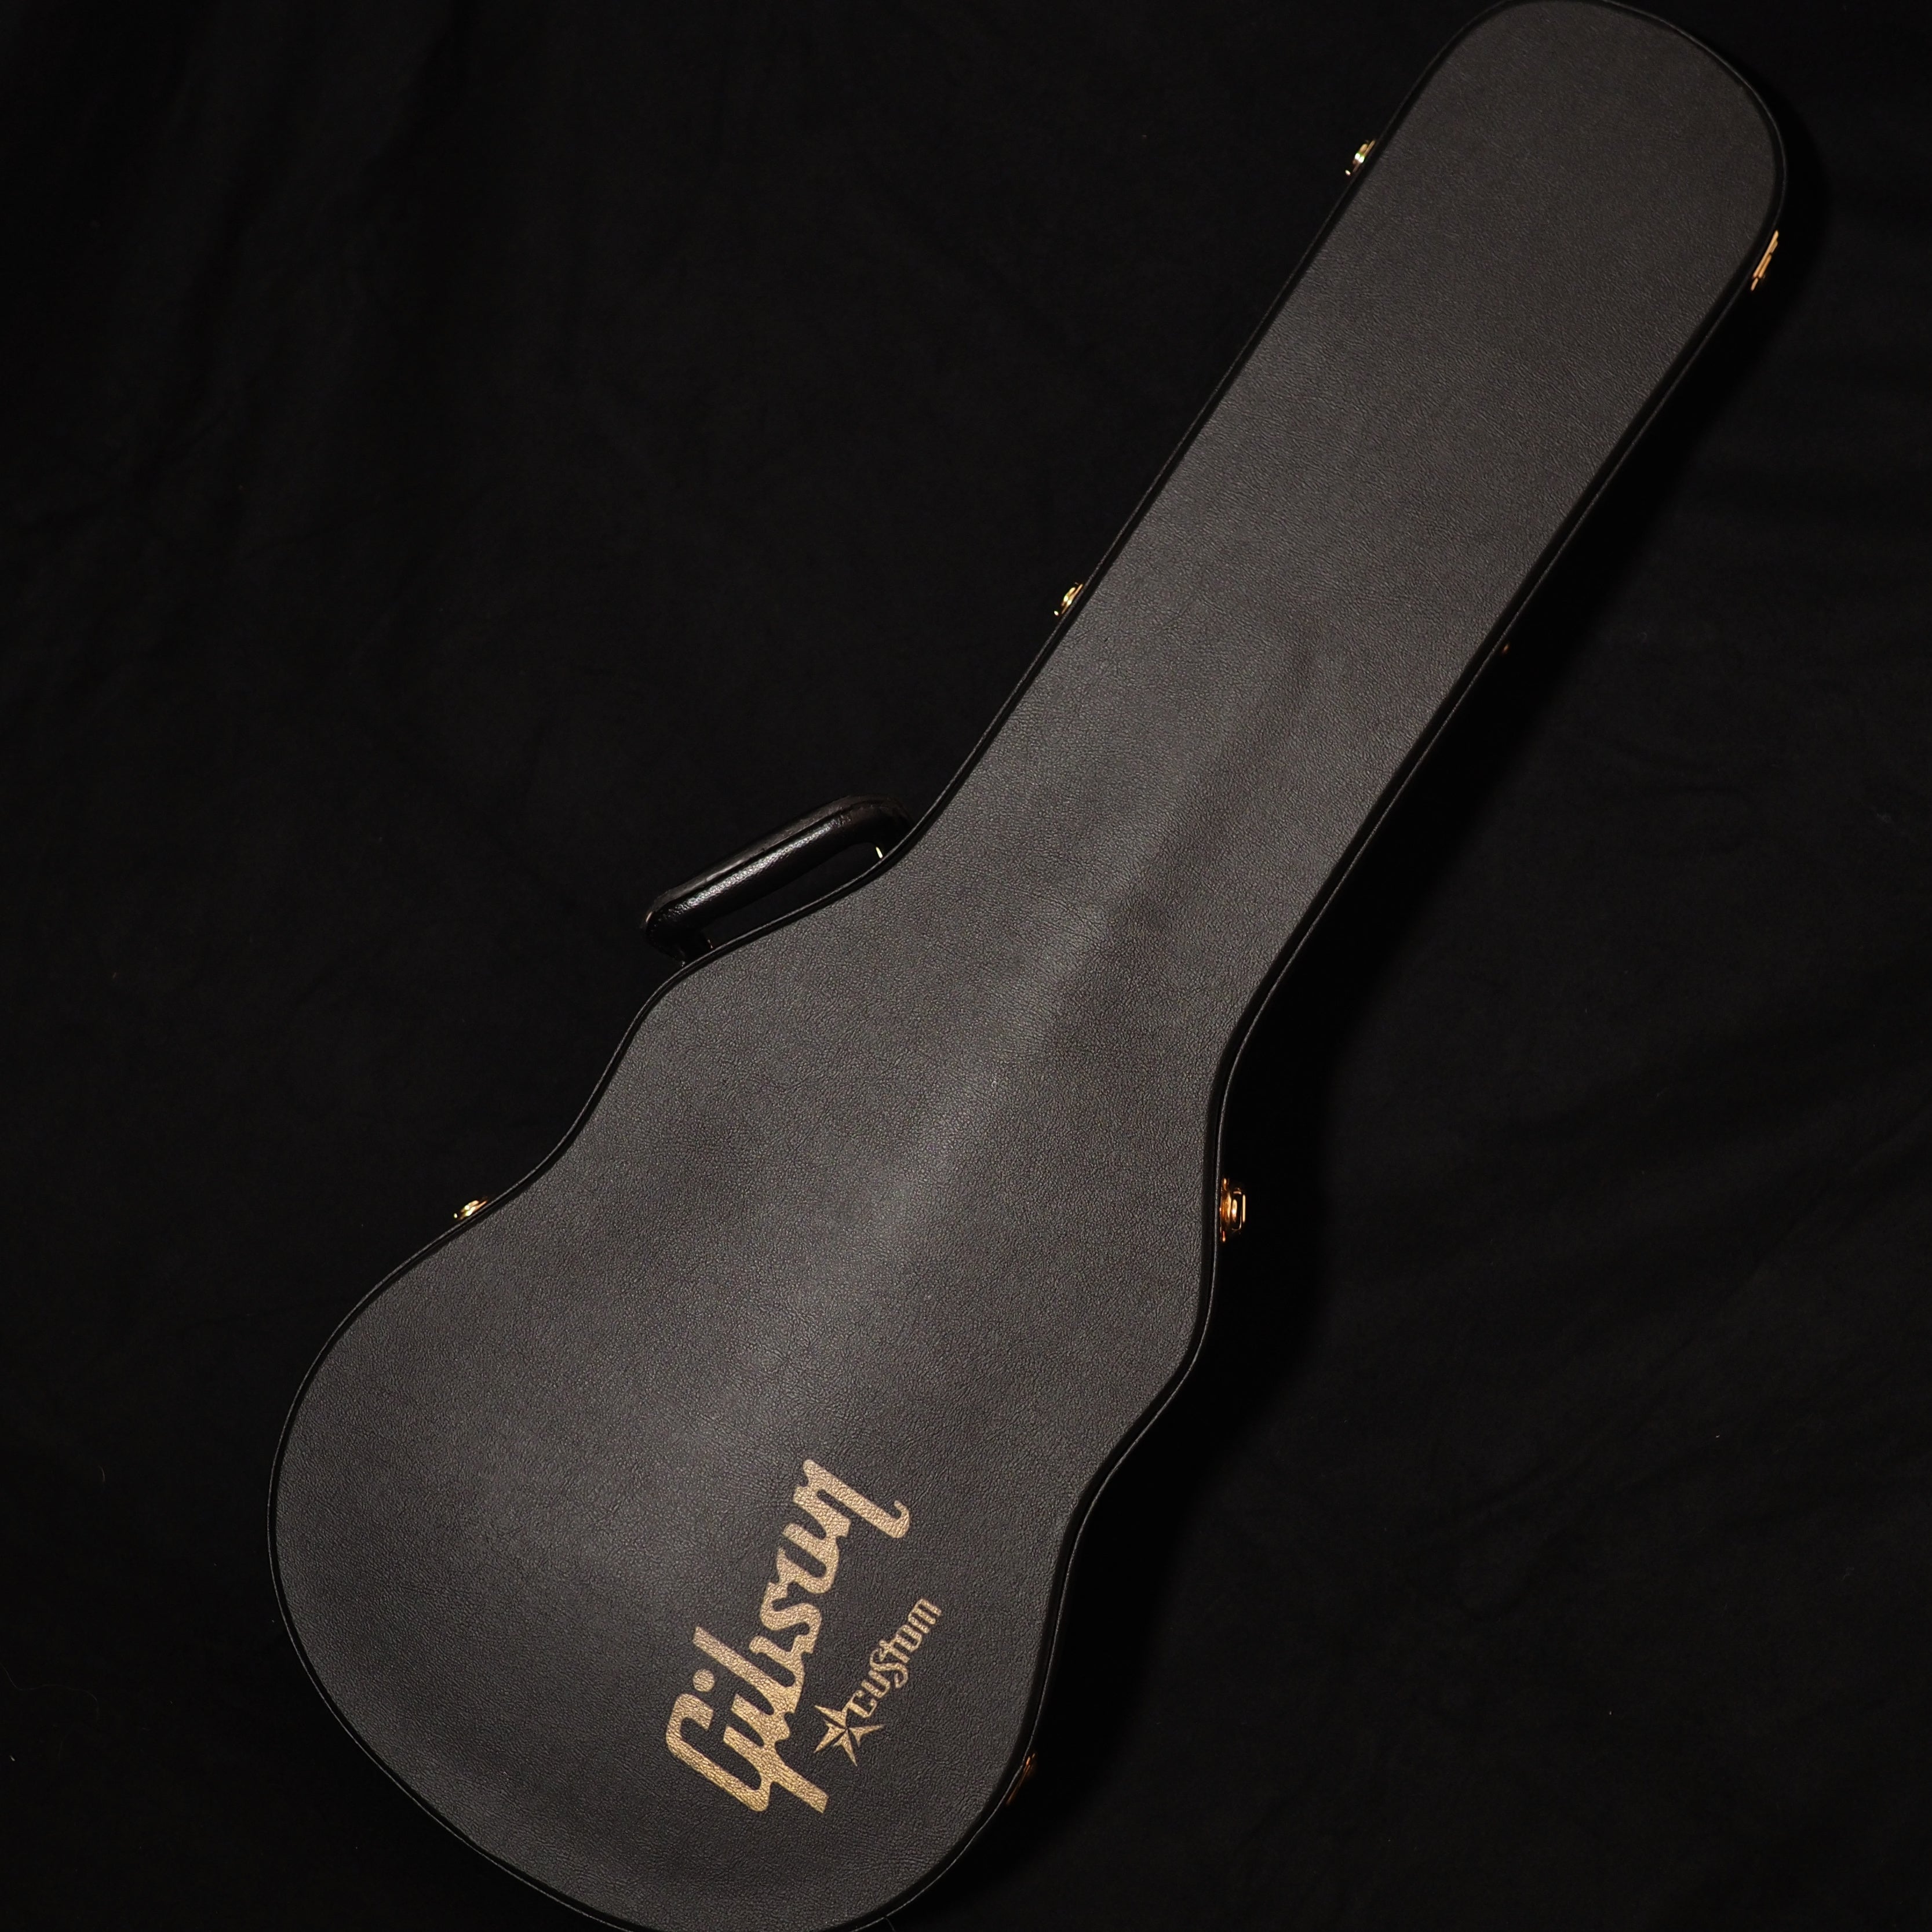 Gibson Custom Shop CS-336 from 2007 - wurst.guitars